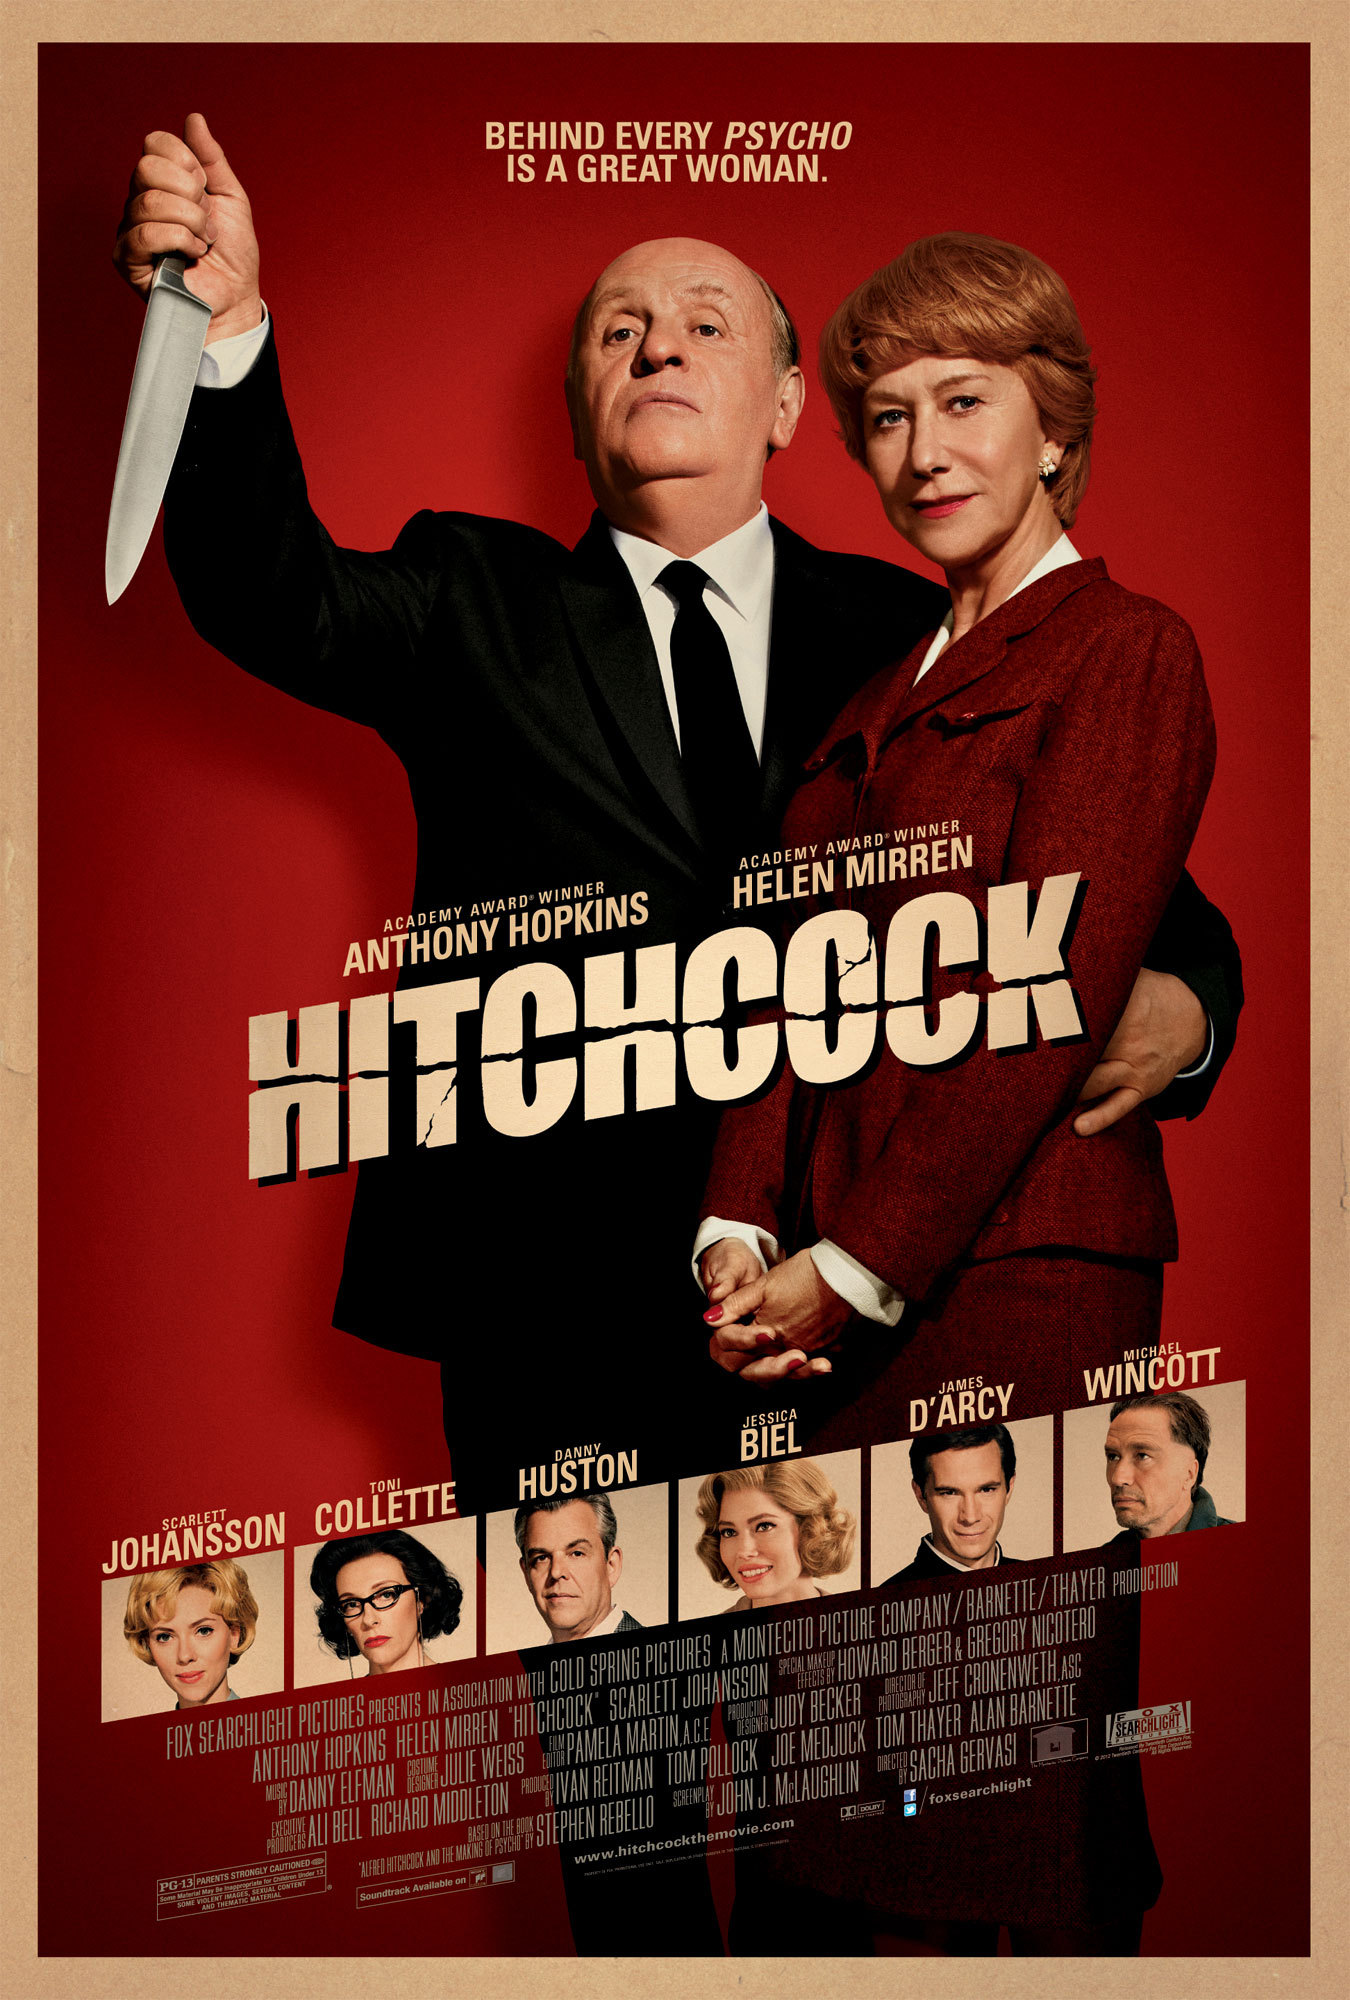 Hitchcock (2012) ฮิทช์ค็อก Anthony Hopkins